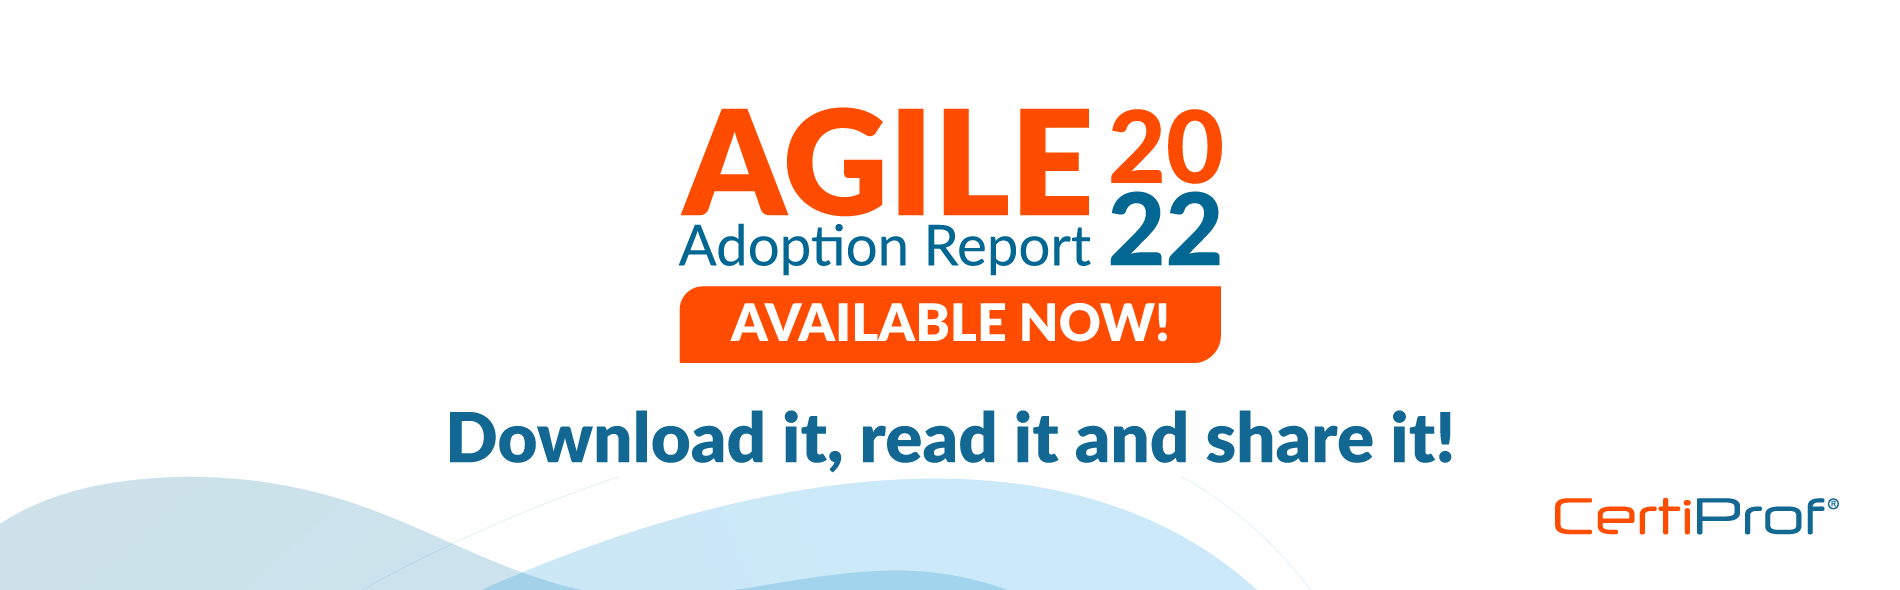 Agile adoption report 2022